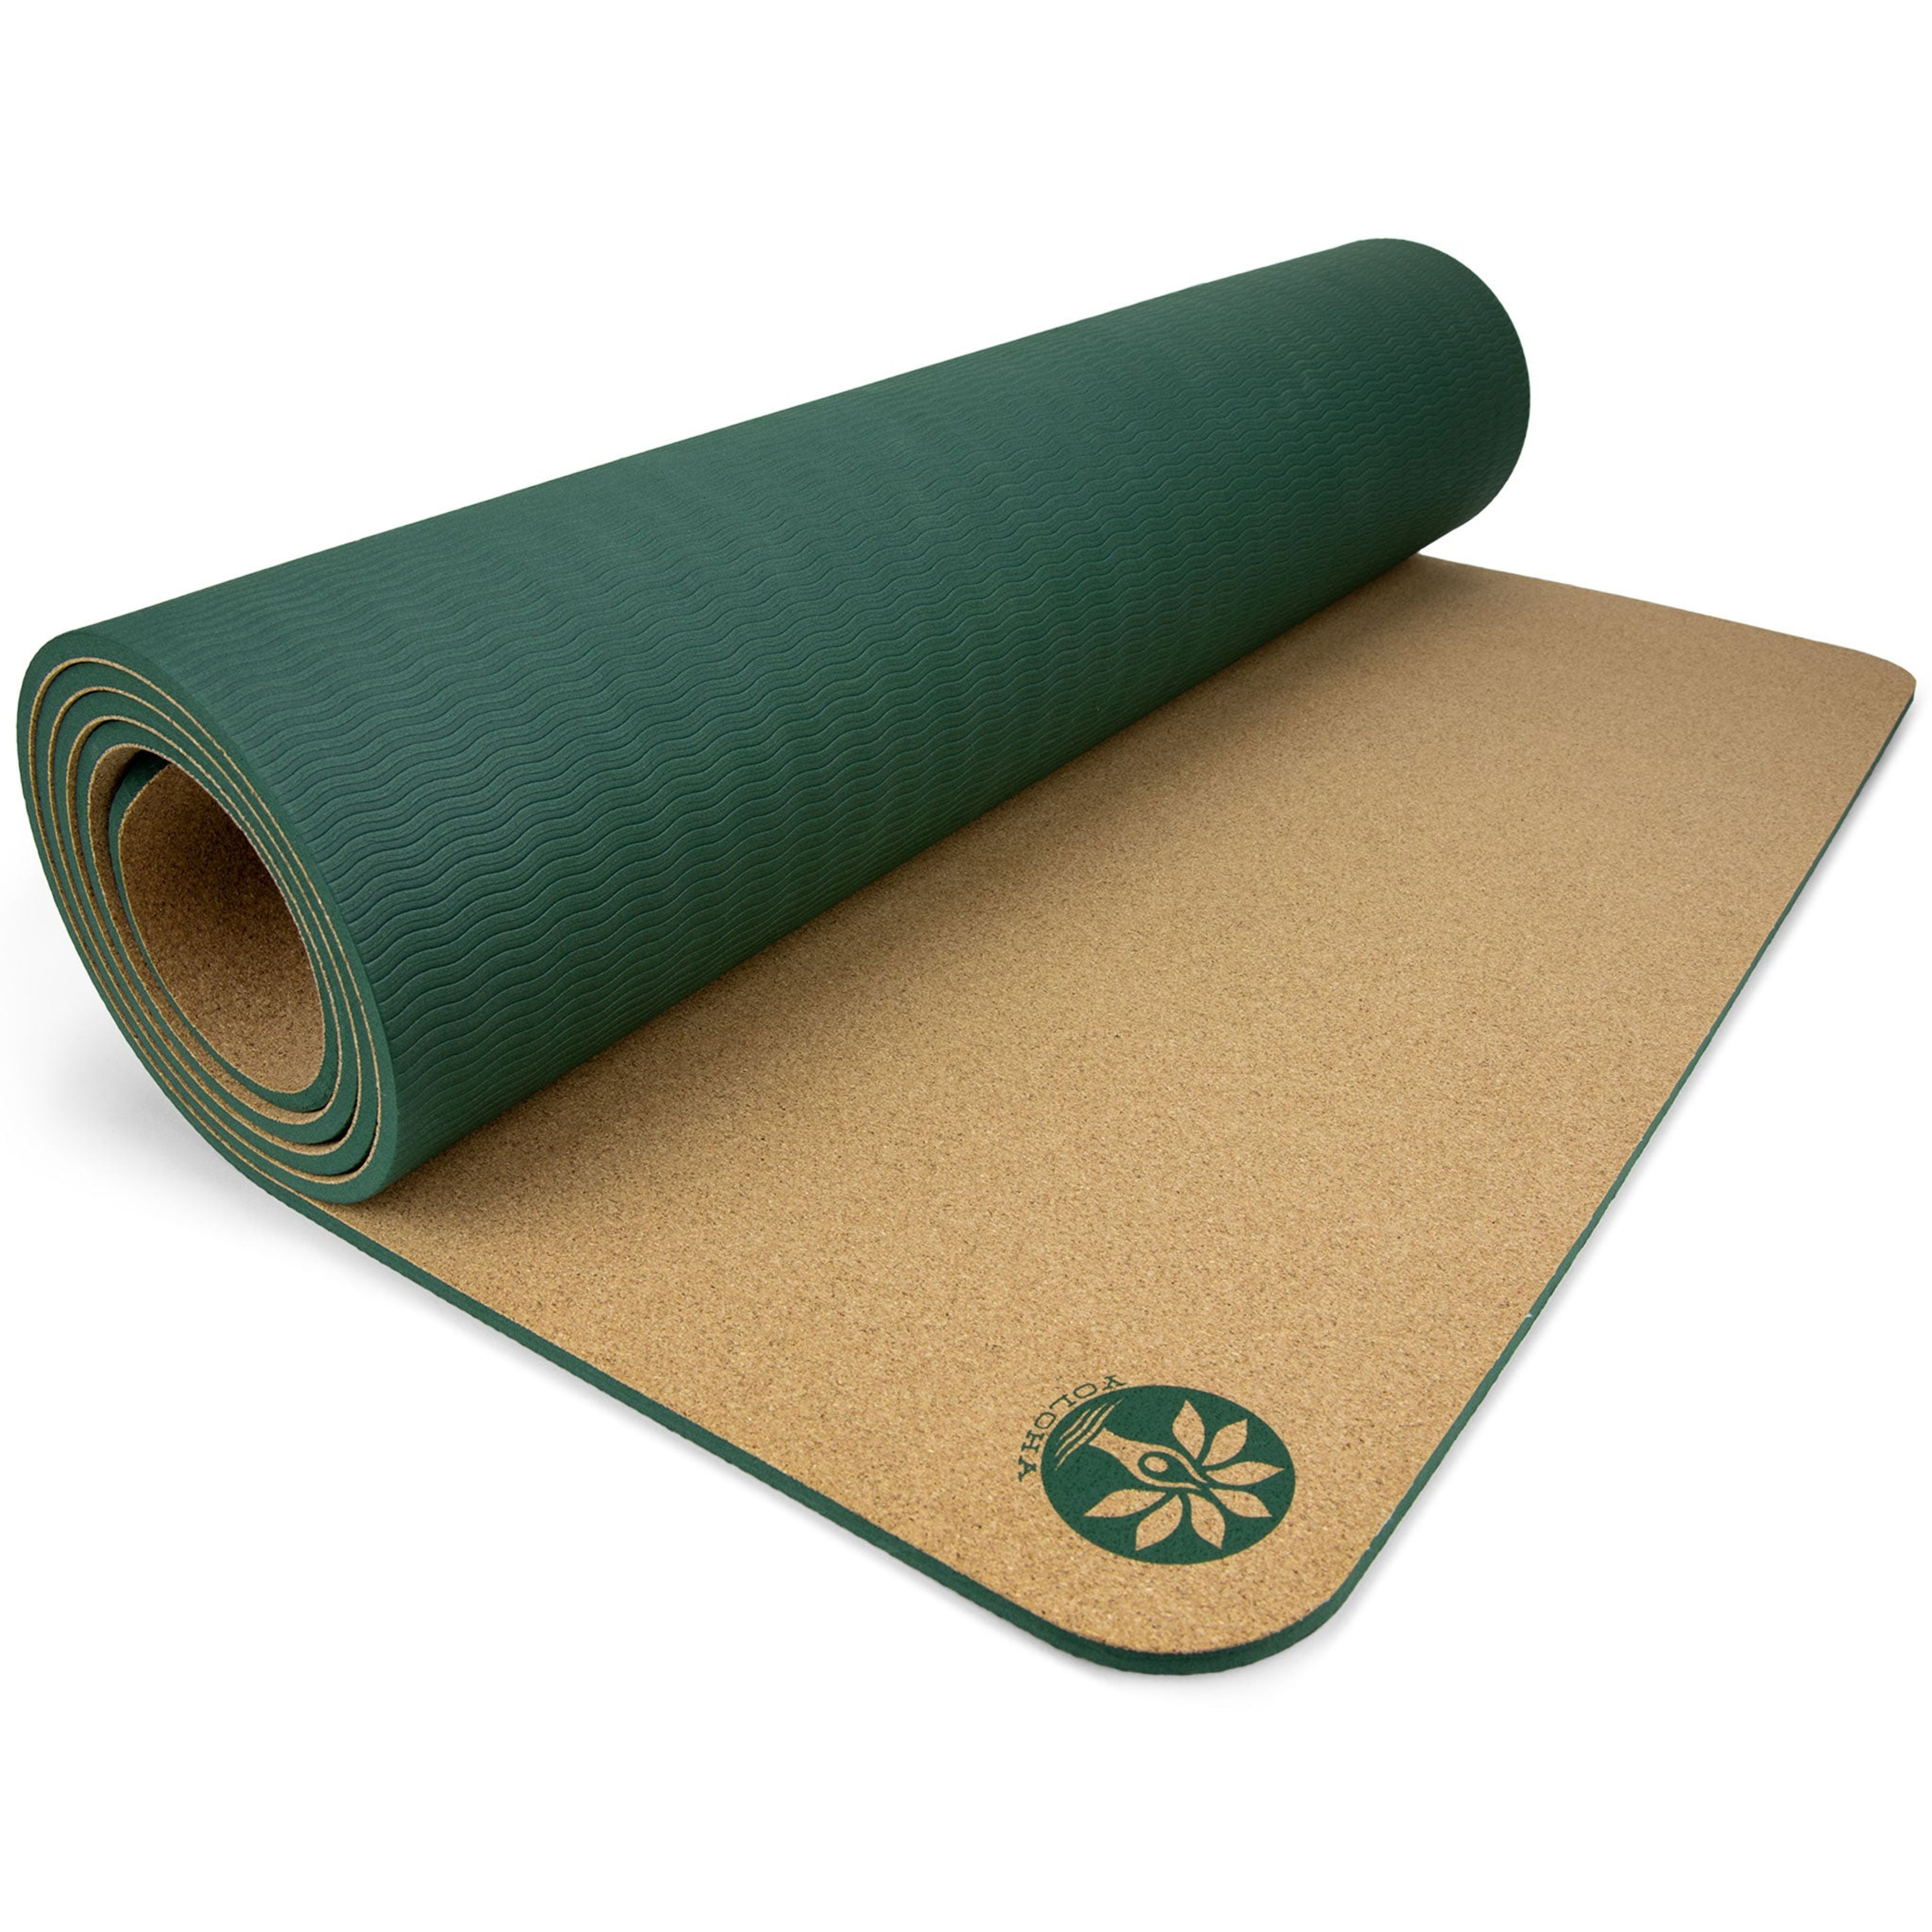 Ananday Cork Yoga Mat